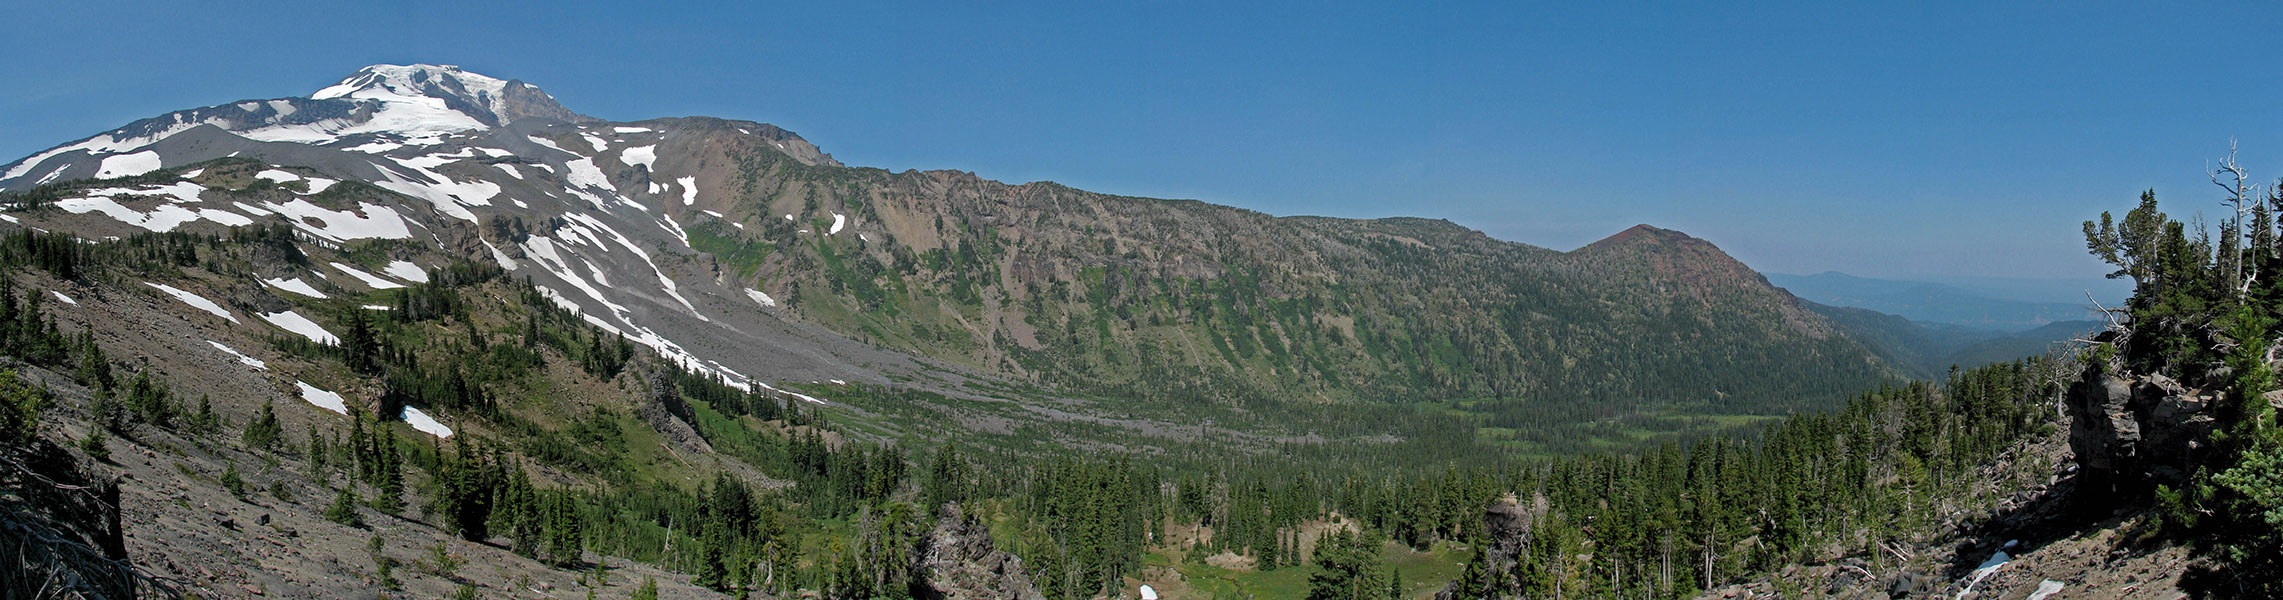 Mount Adams panorama [Hellroaring Viewpoint, Yakama Reservation, Yakima County, Washington]